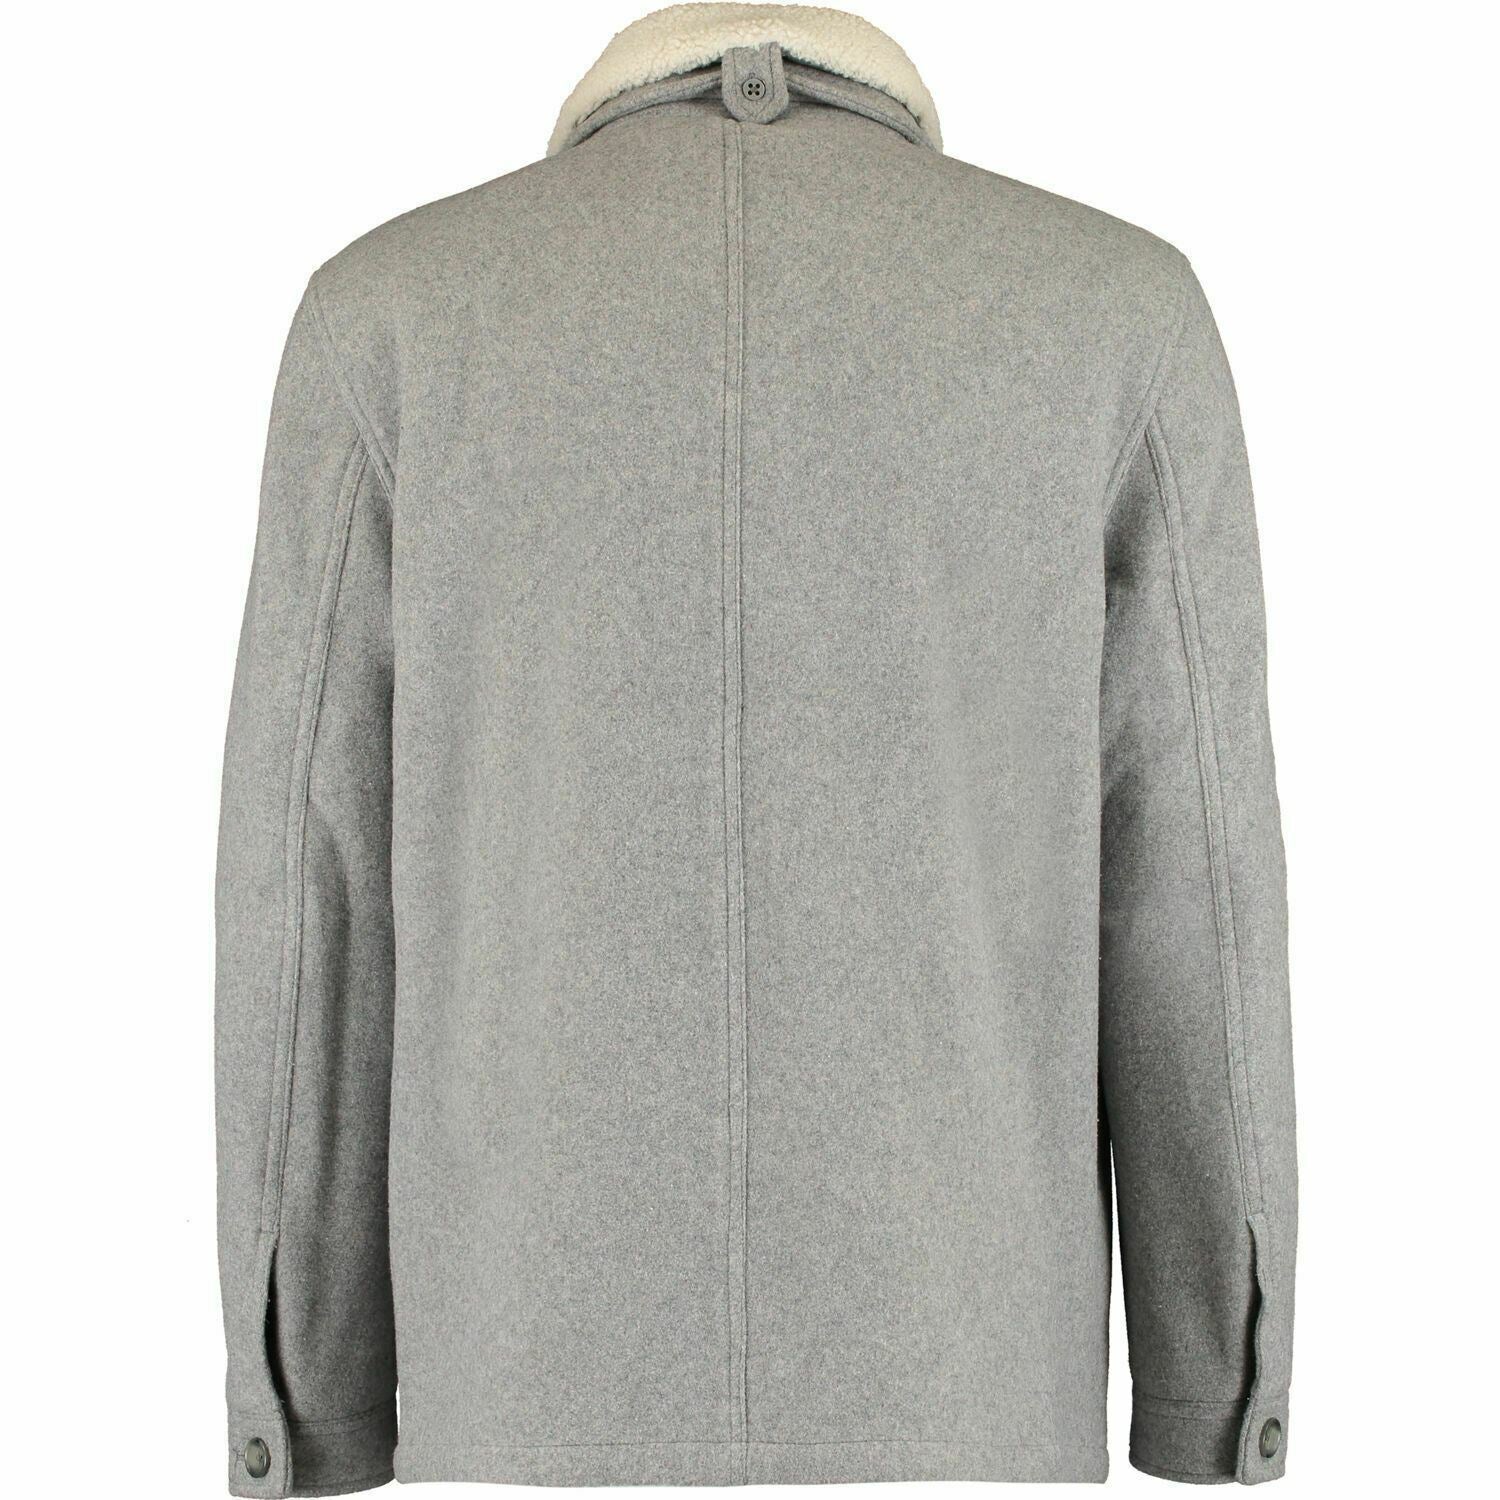 MICHAEL KORS Men's Wool Blend & Faux Shearling Collar Jacket Coat, Grey, size M